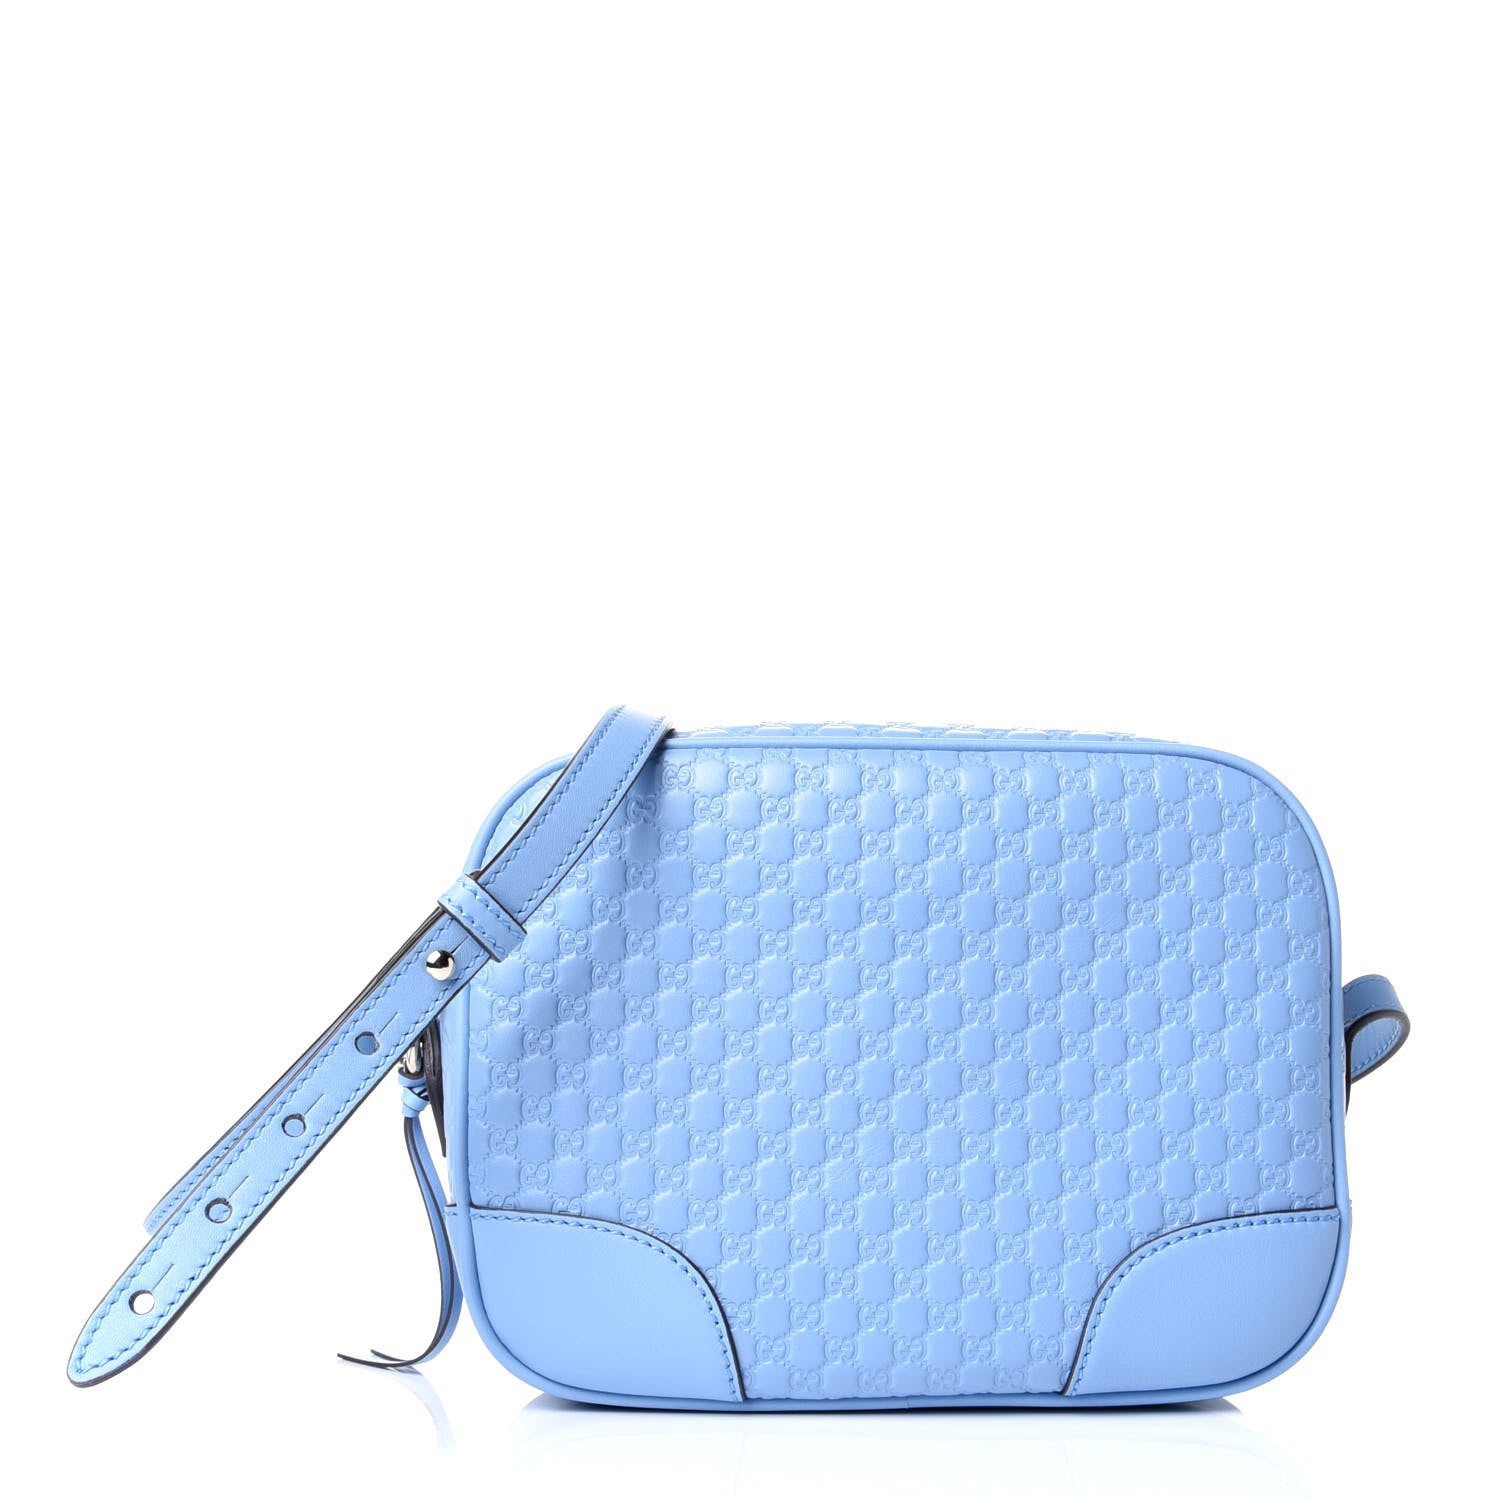 Gucci Navy Blue Guccissima Leather Small Padlock Shoulder Bag Gucci